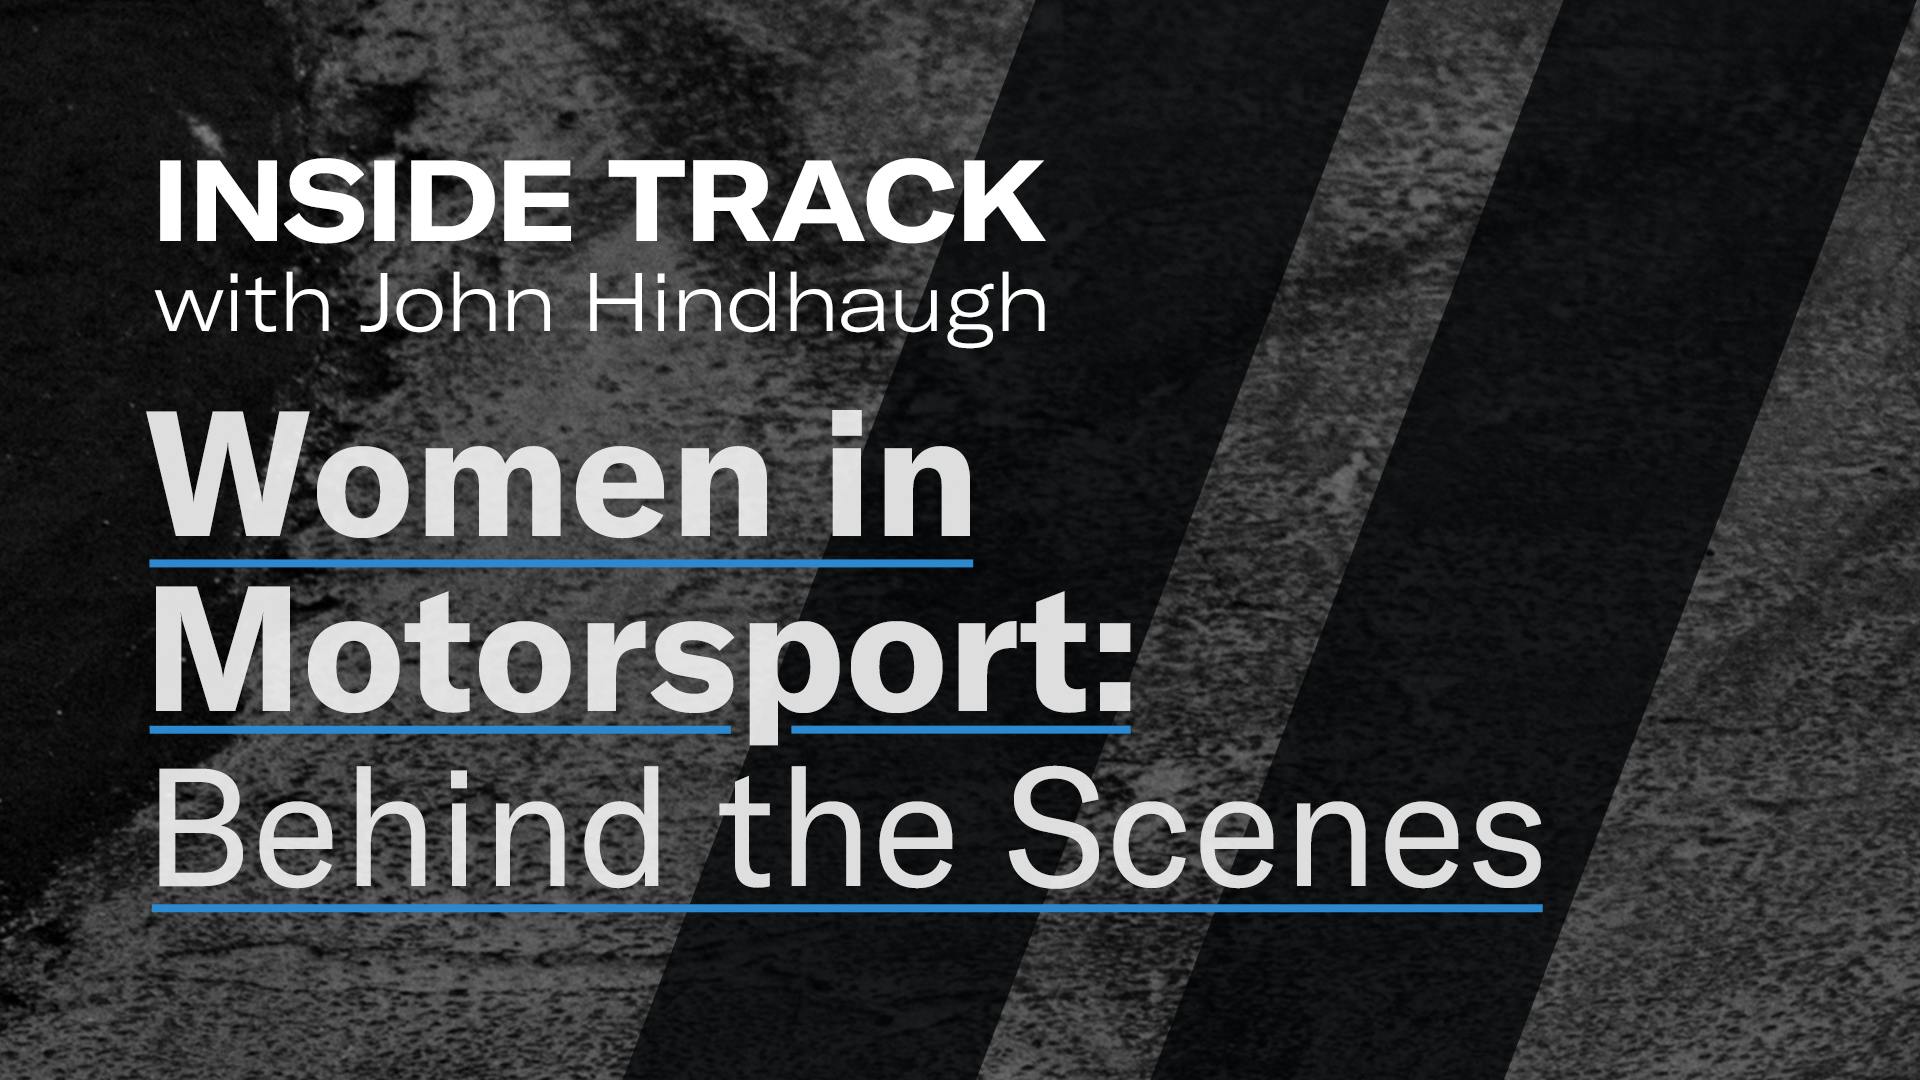 Women in Motorsport: Behind the Scenes | Inside Track with John Hindhaugh